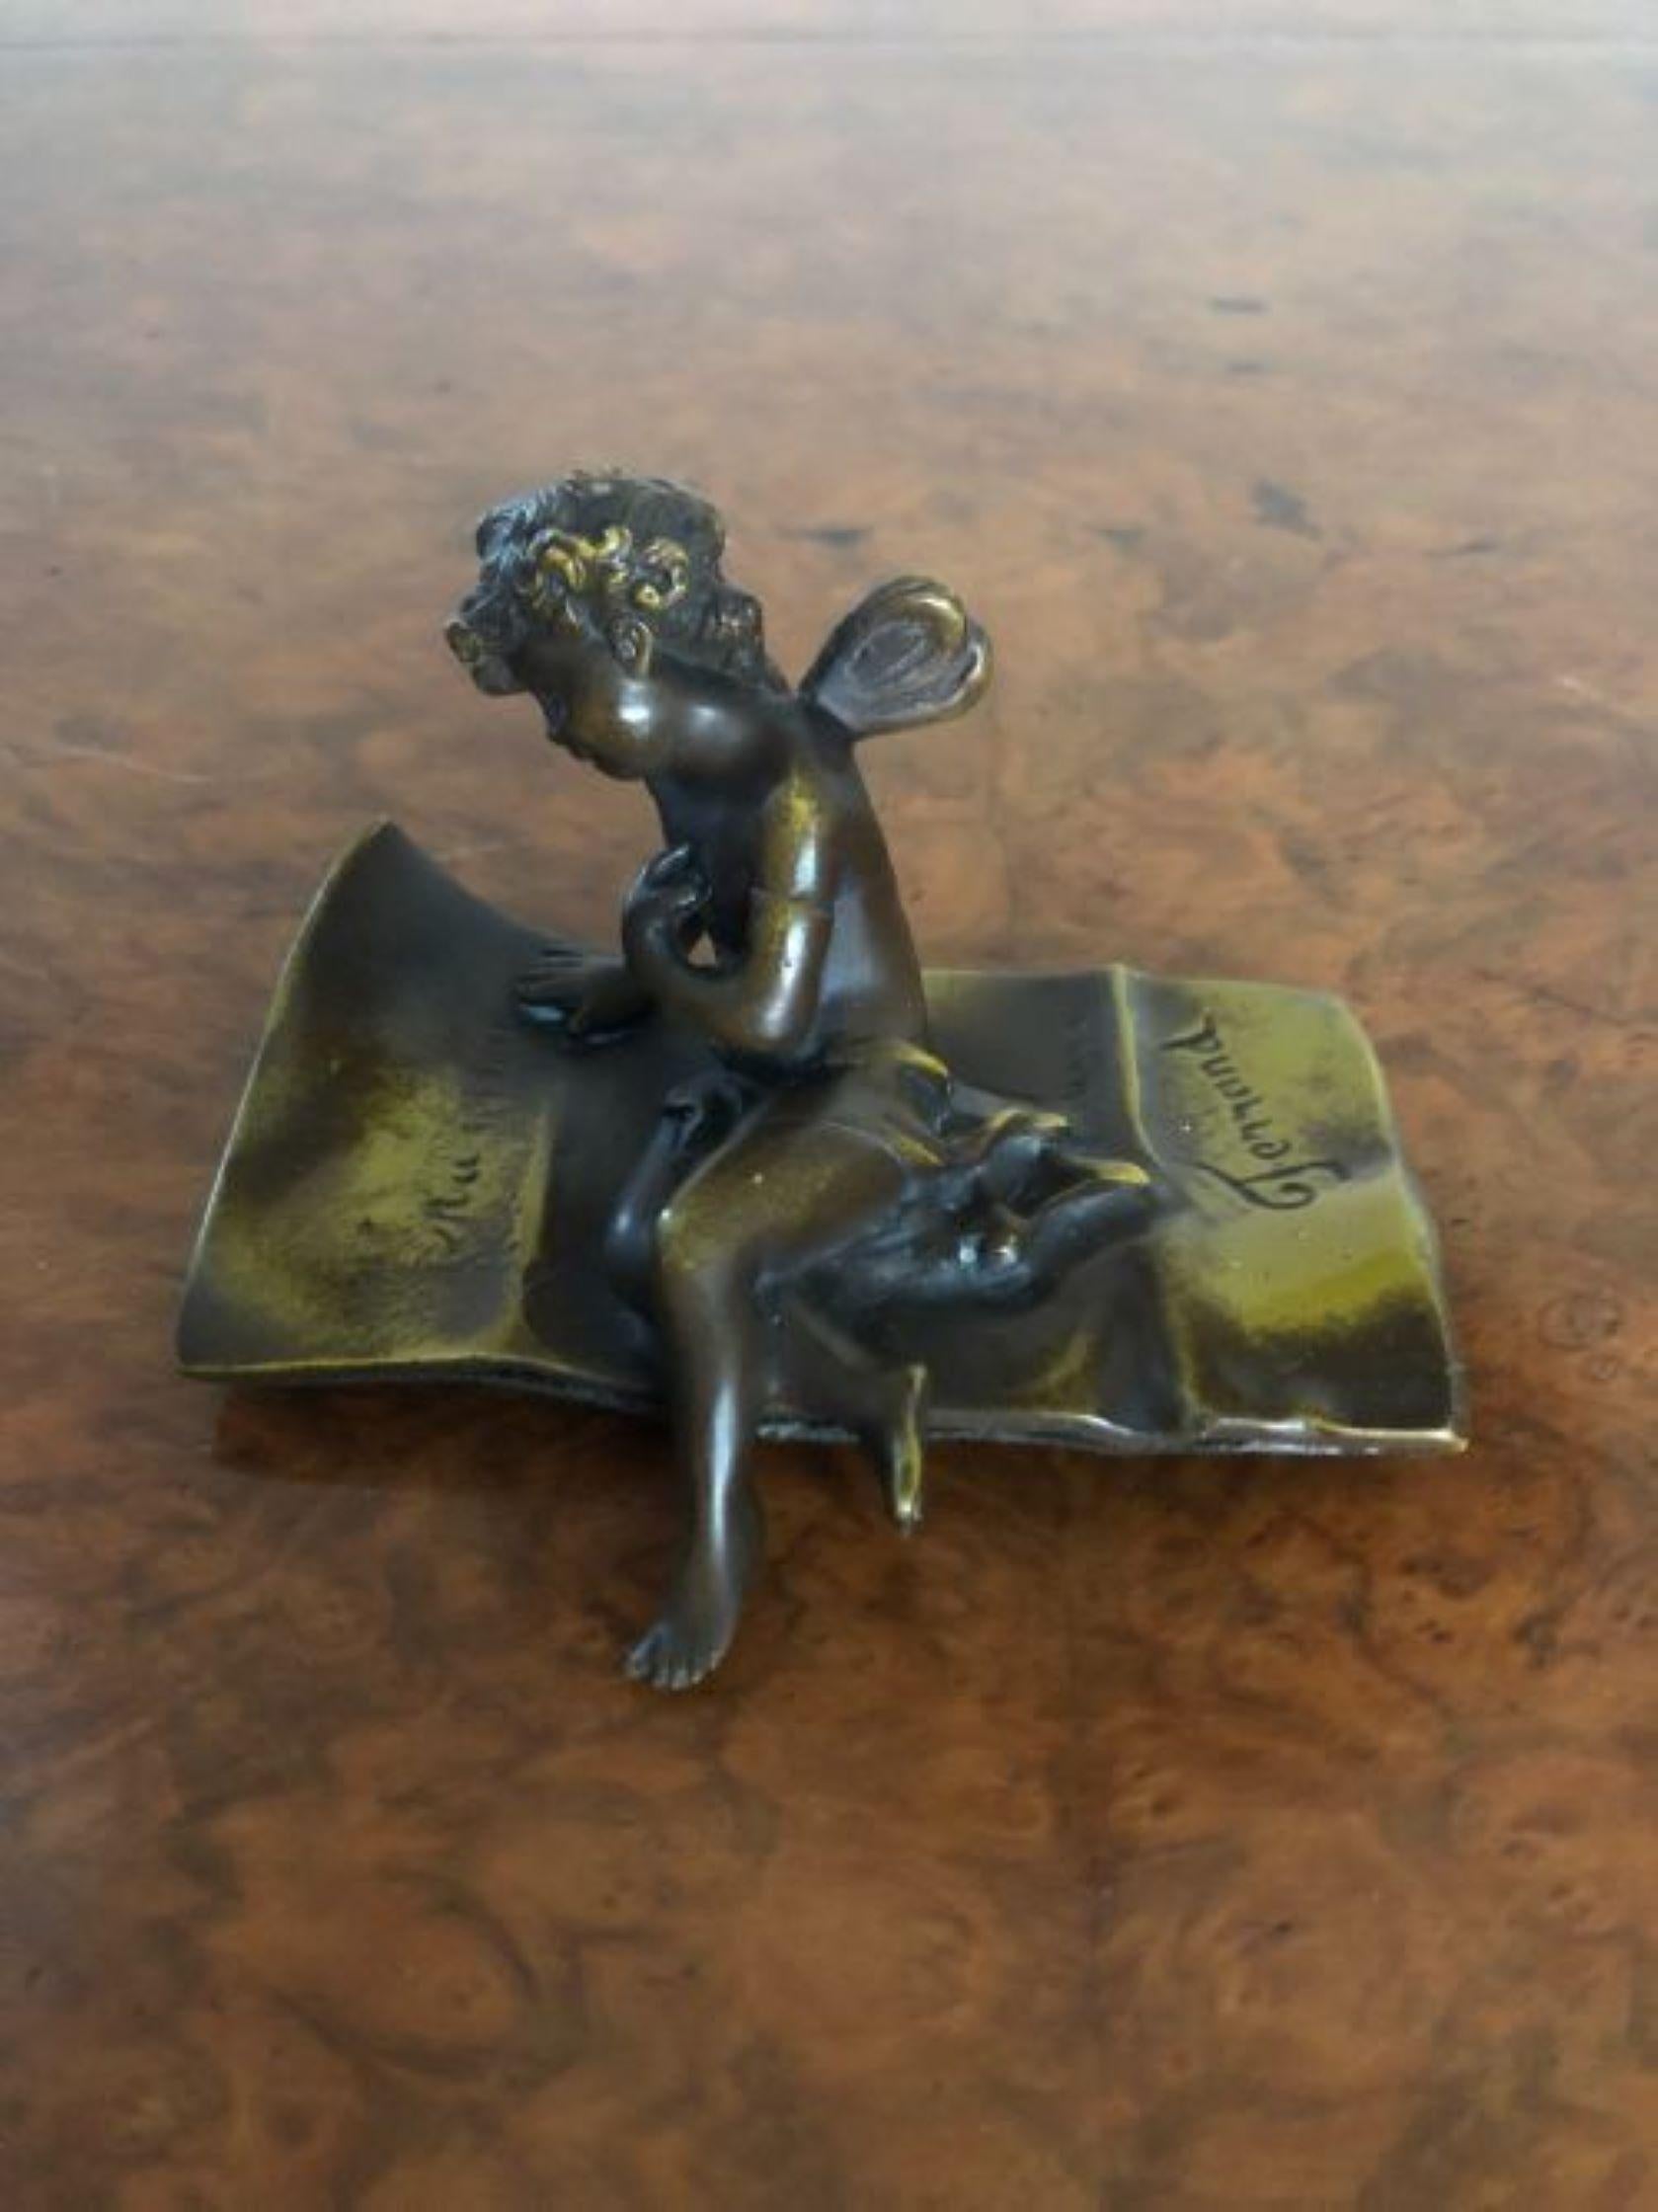 Quality Antique bronze cupid figure signed Ferrand. Quality bronze figure of a cupid setting on a rug signed Ferrand for Ernst Justin Ferrand.
